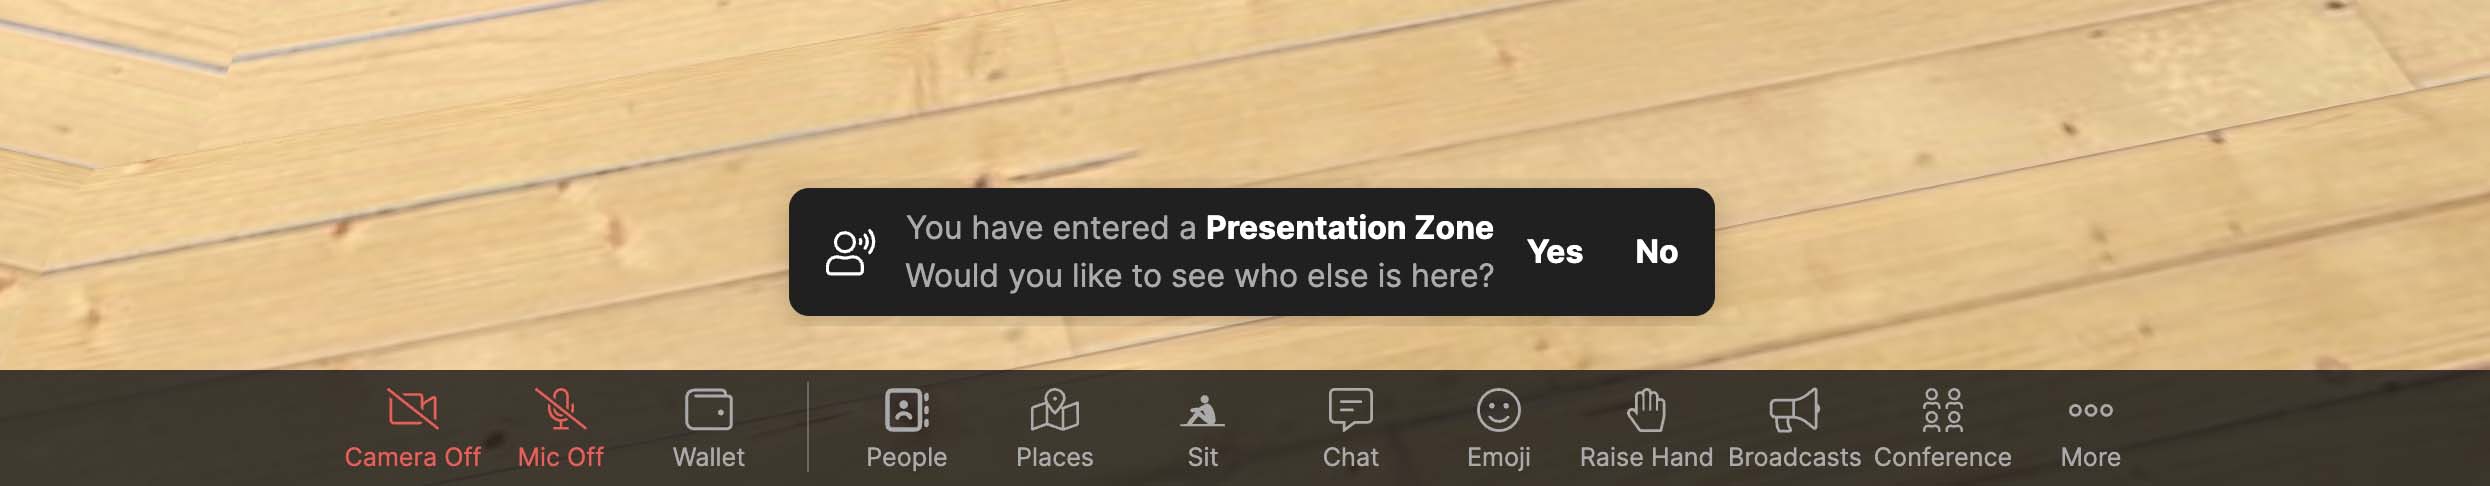 presentation-zone-welcome-toast.jpg